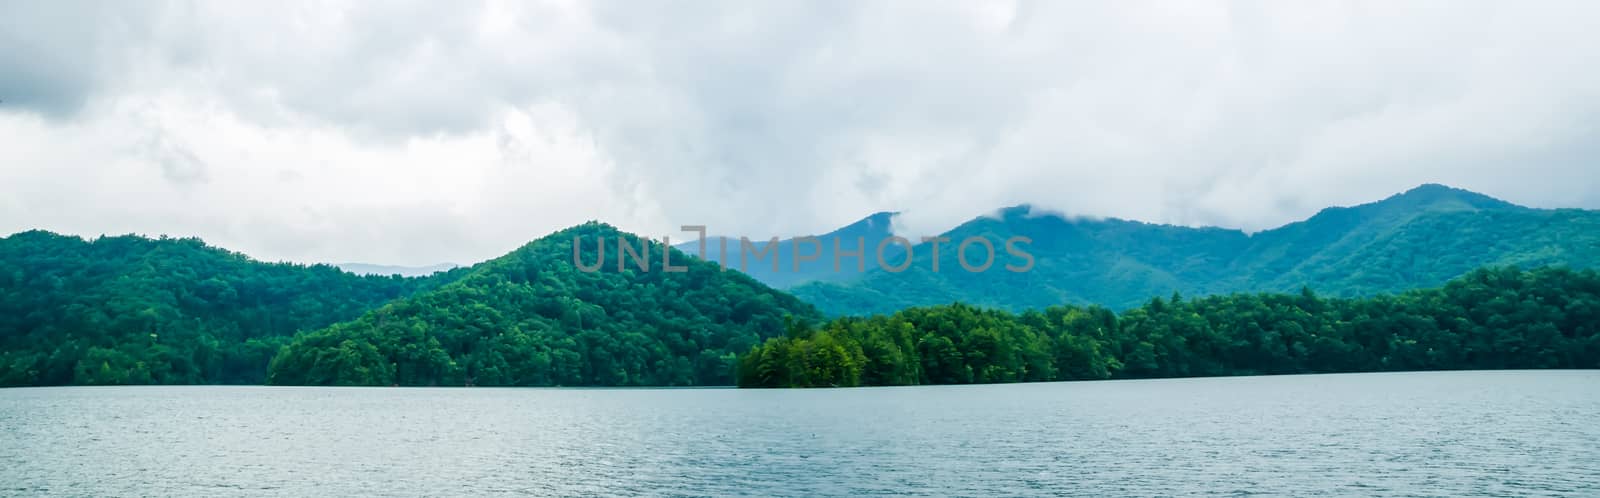 lake santeetlah in great smoky mountains by digidreamgrafix